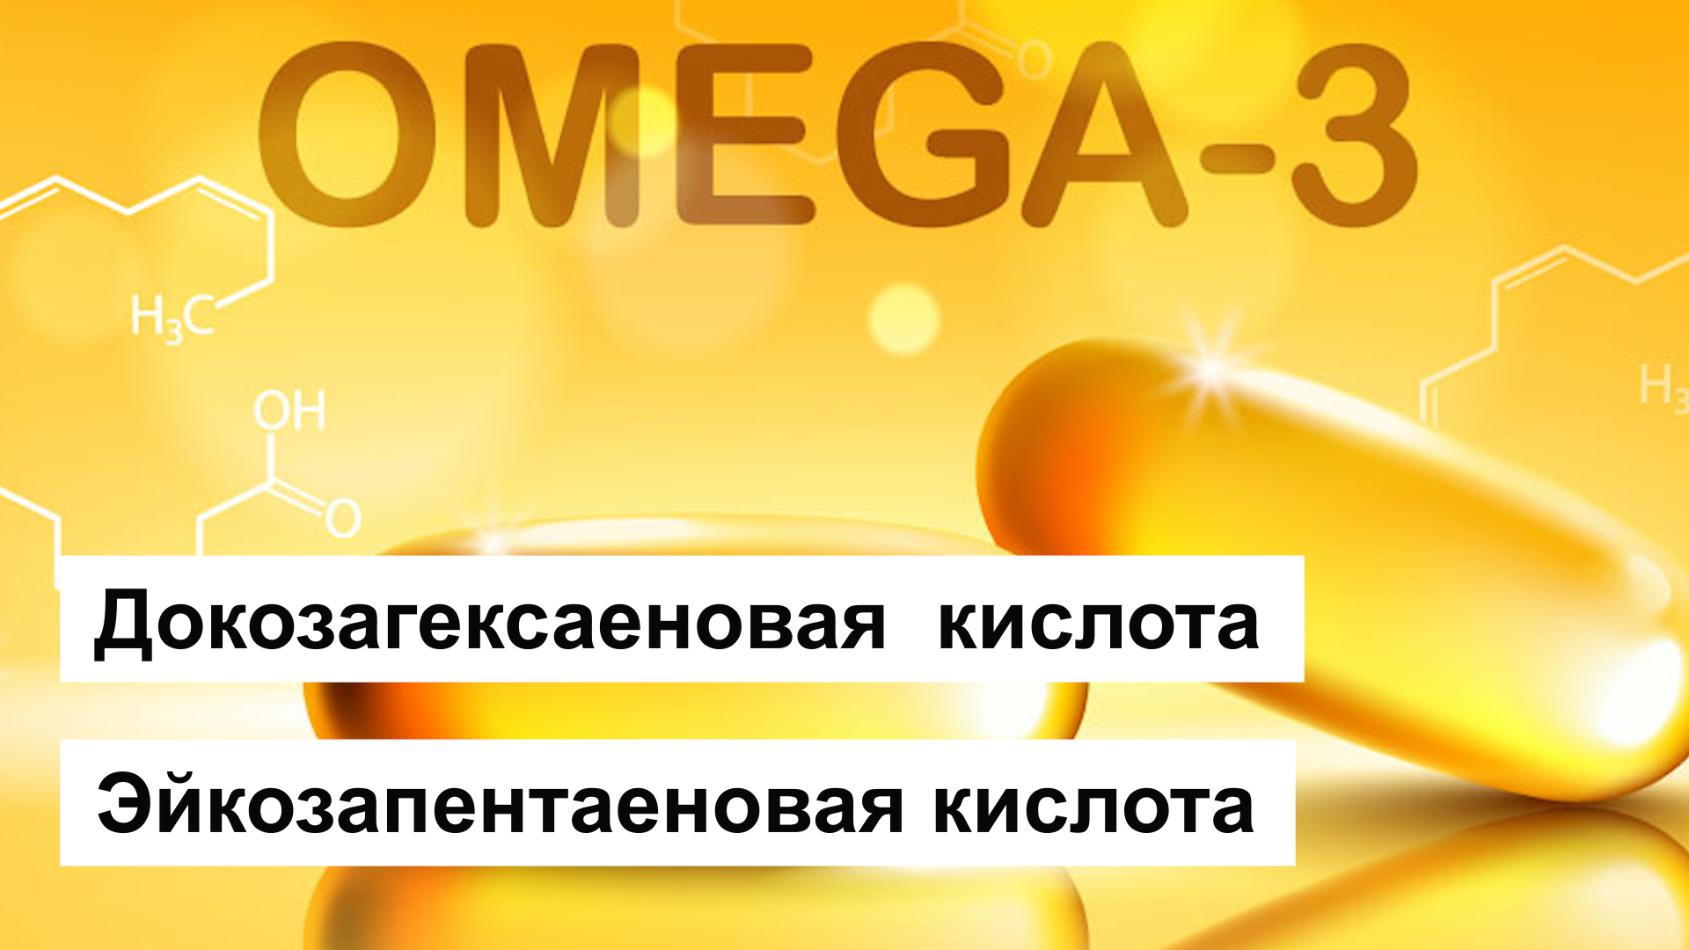 Омега-3 как ресурс активности нашего организма